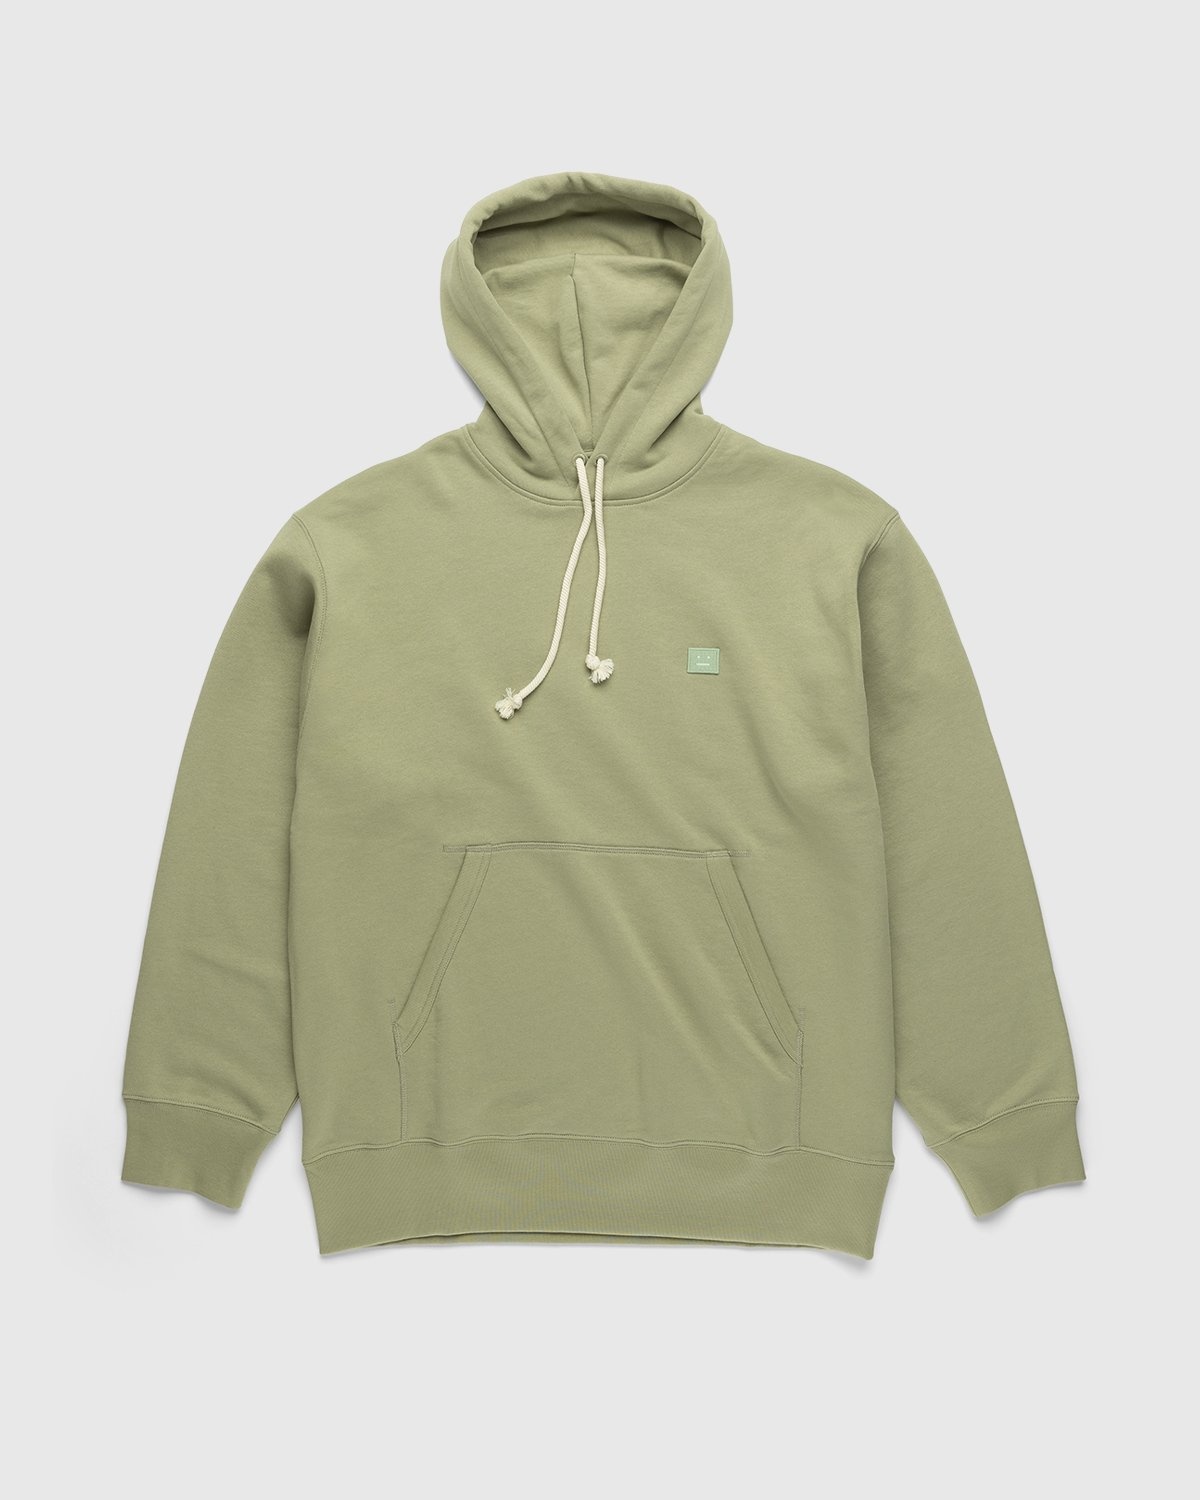 Acne Studios – Organic Cotton Hooded Sweatshirt Eucalyptus Green - Hoodies - Green - Image 1